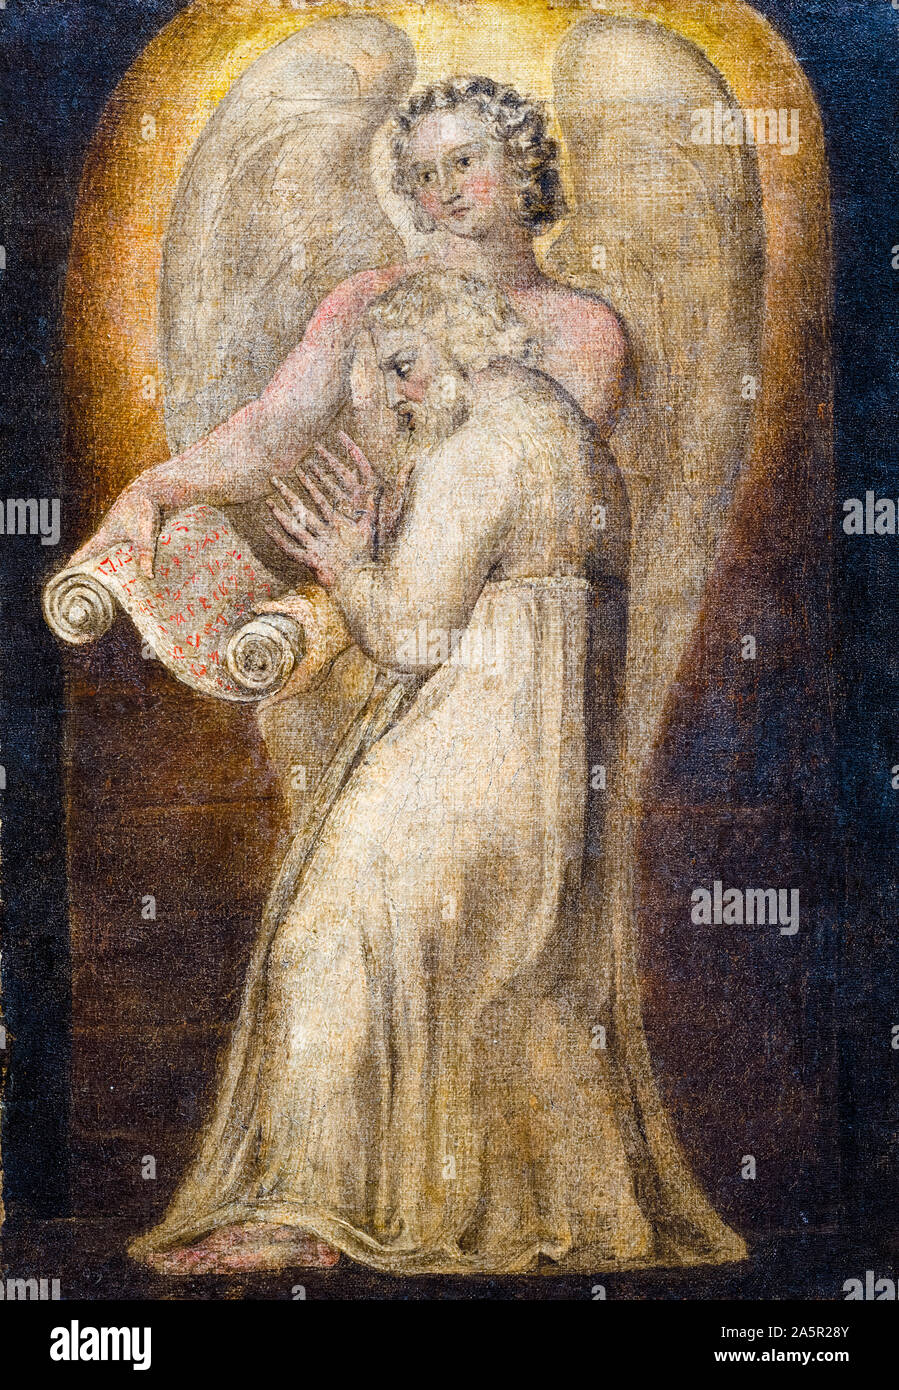 William Blake, St Matthew, tempera on canvas painting, 1799 Stock Photo